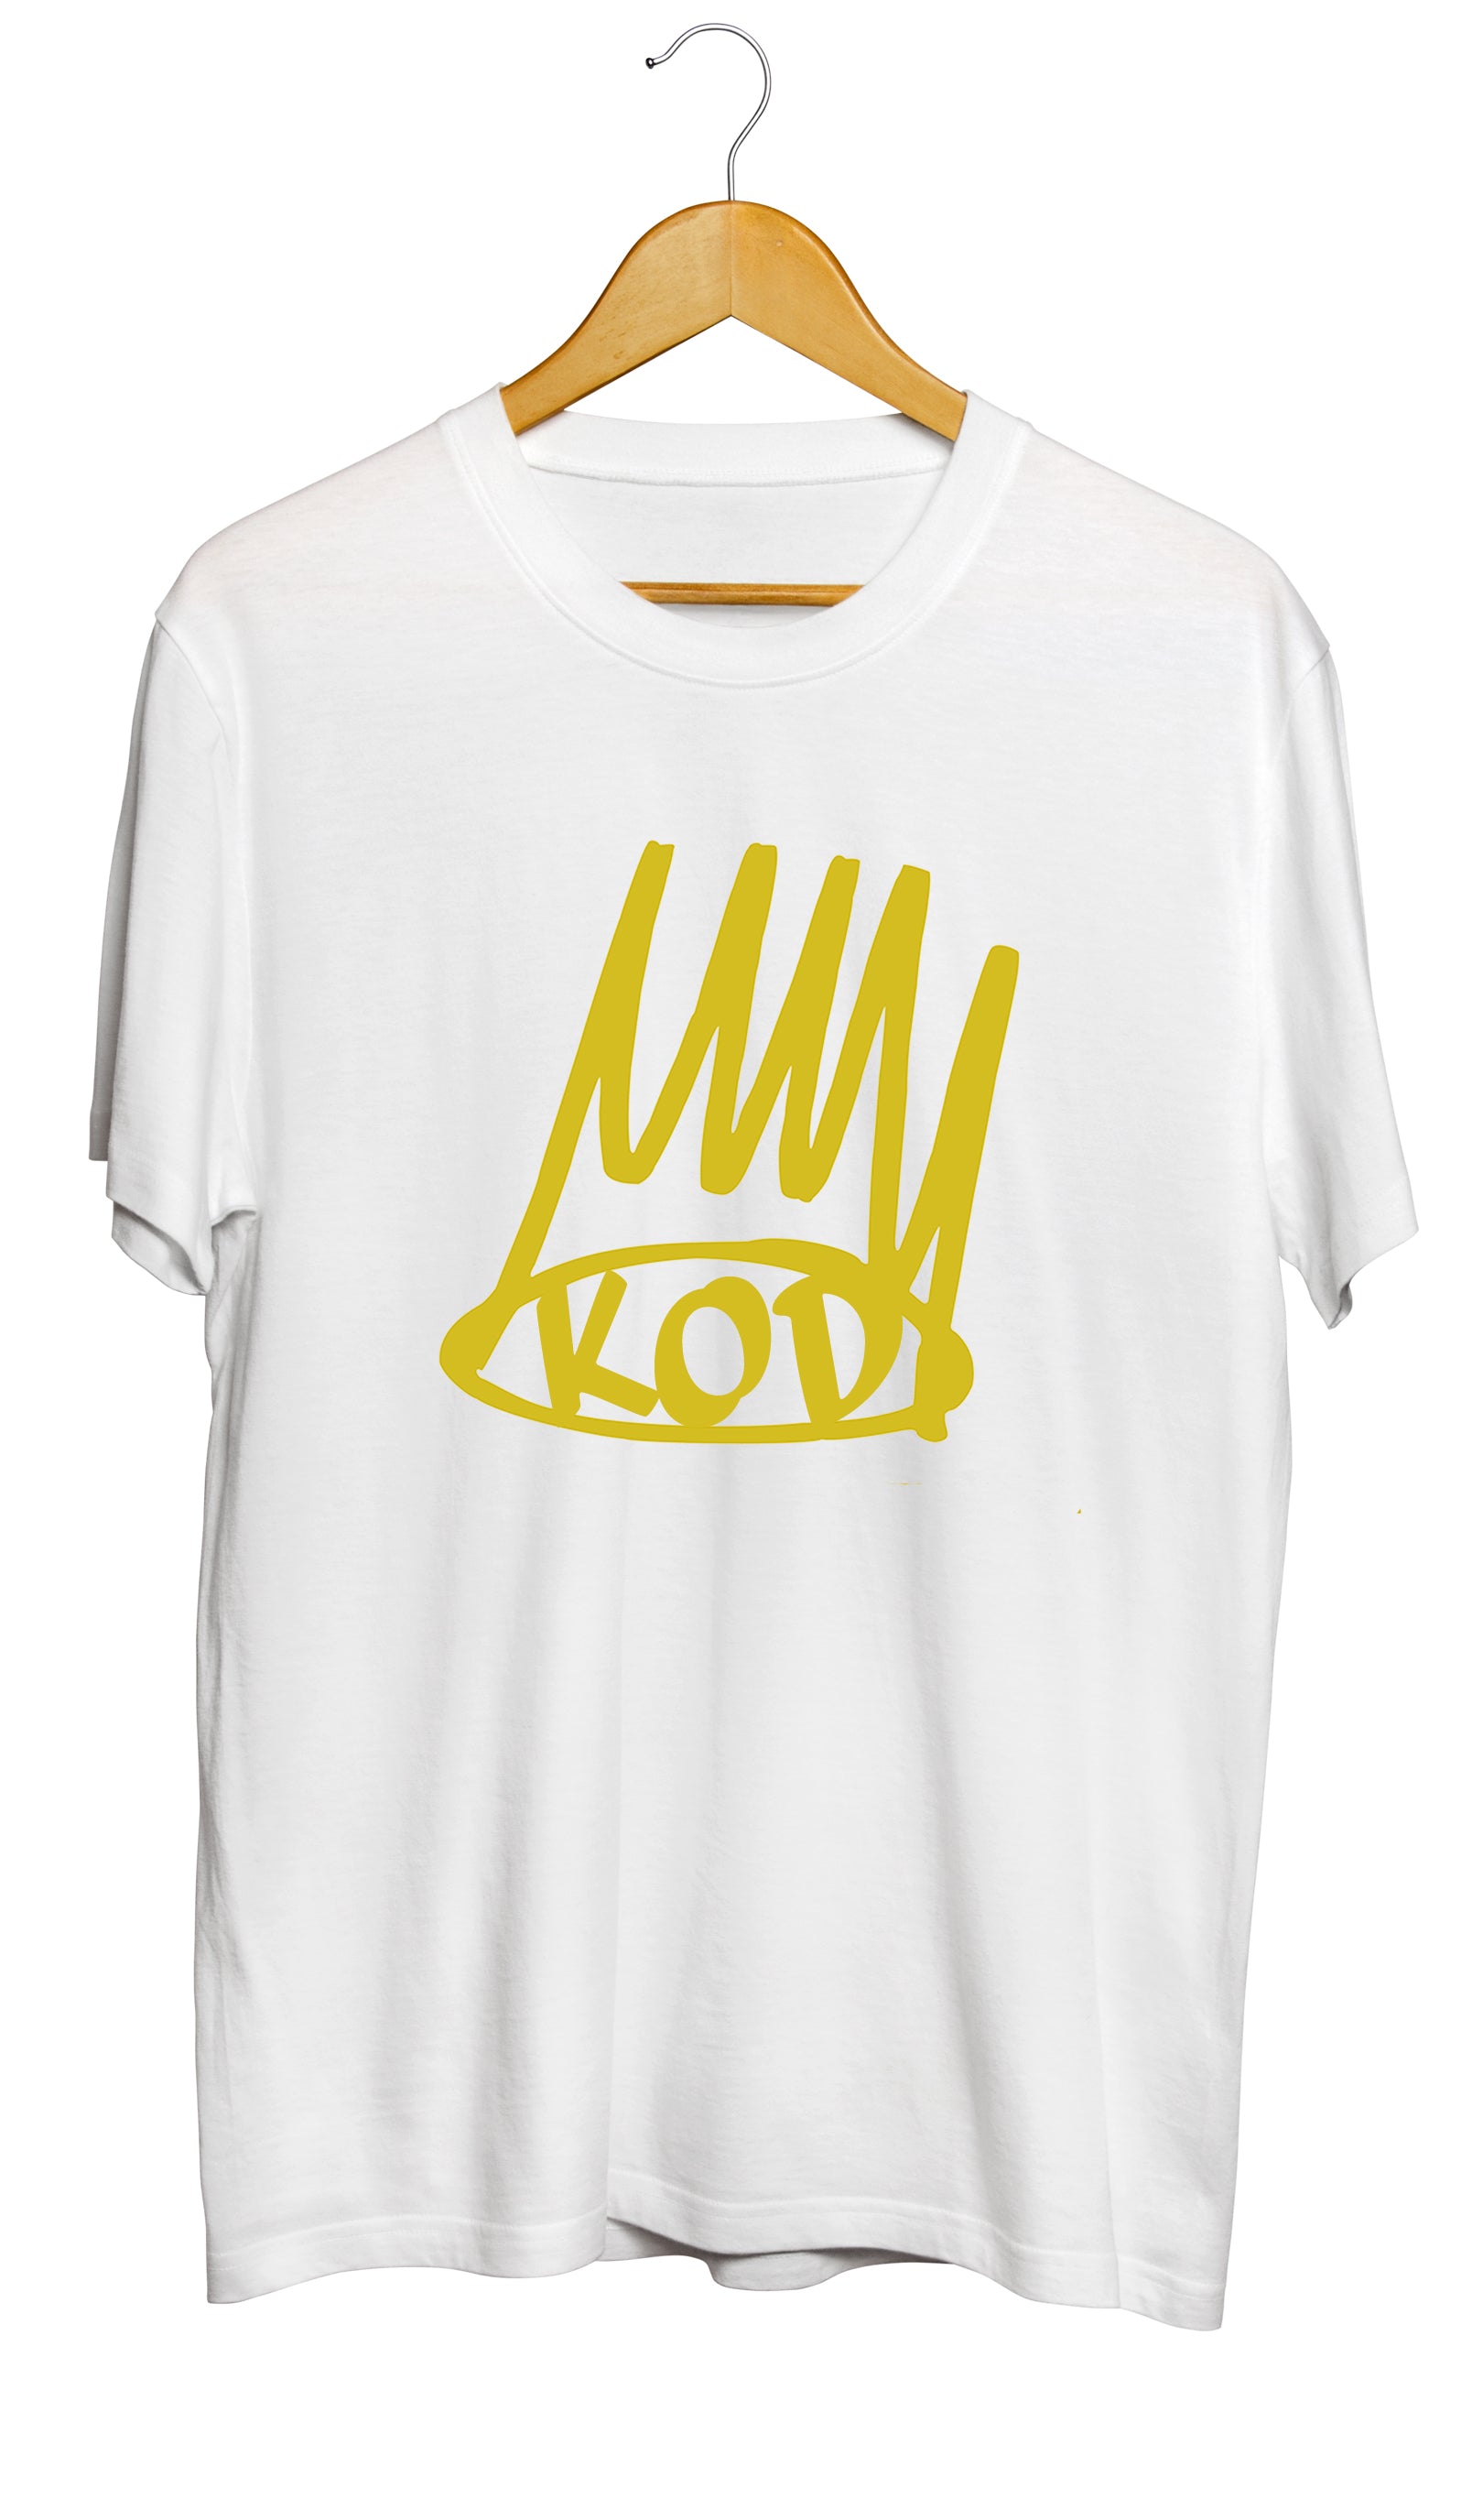 J Cole/K.O.D./Crown T-Shirt - Ourt